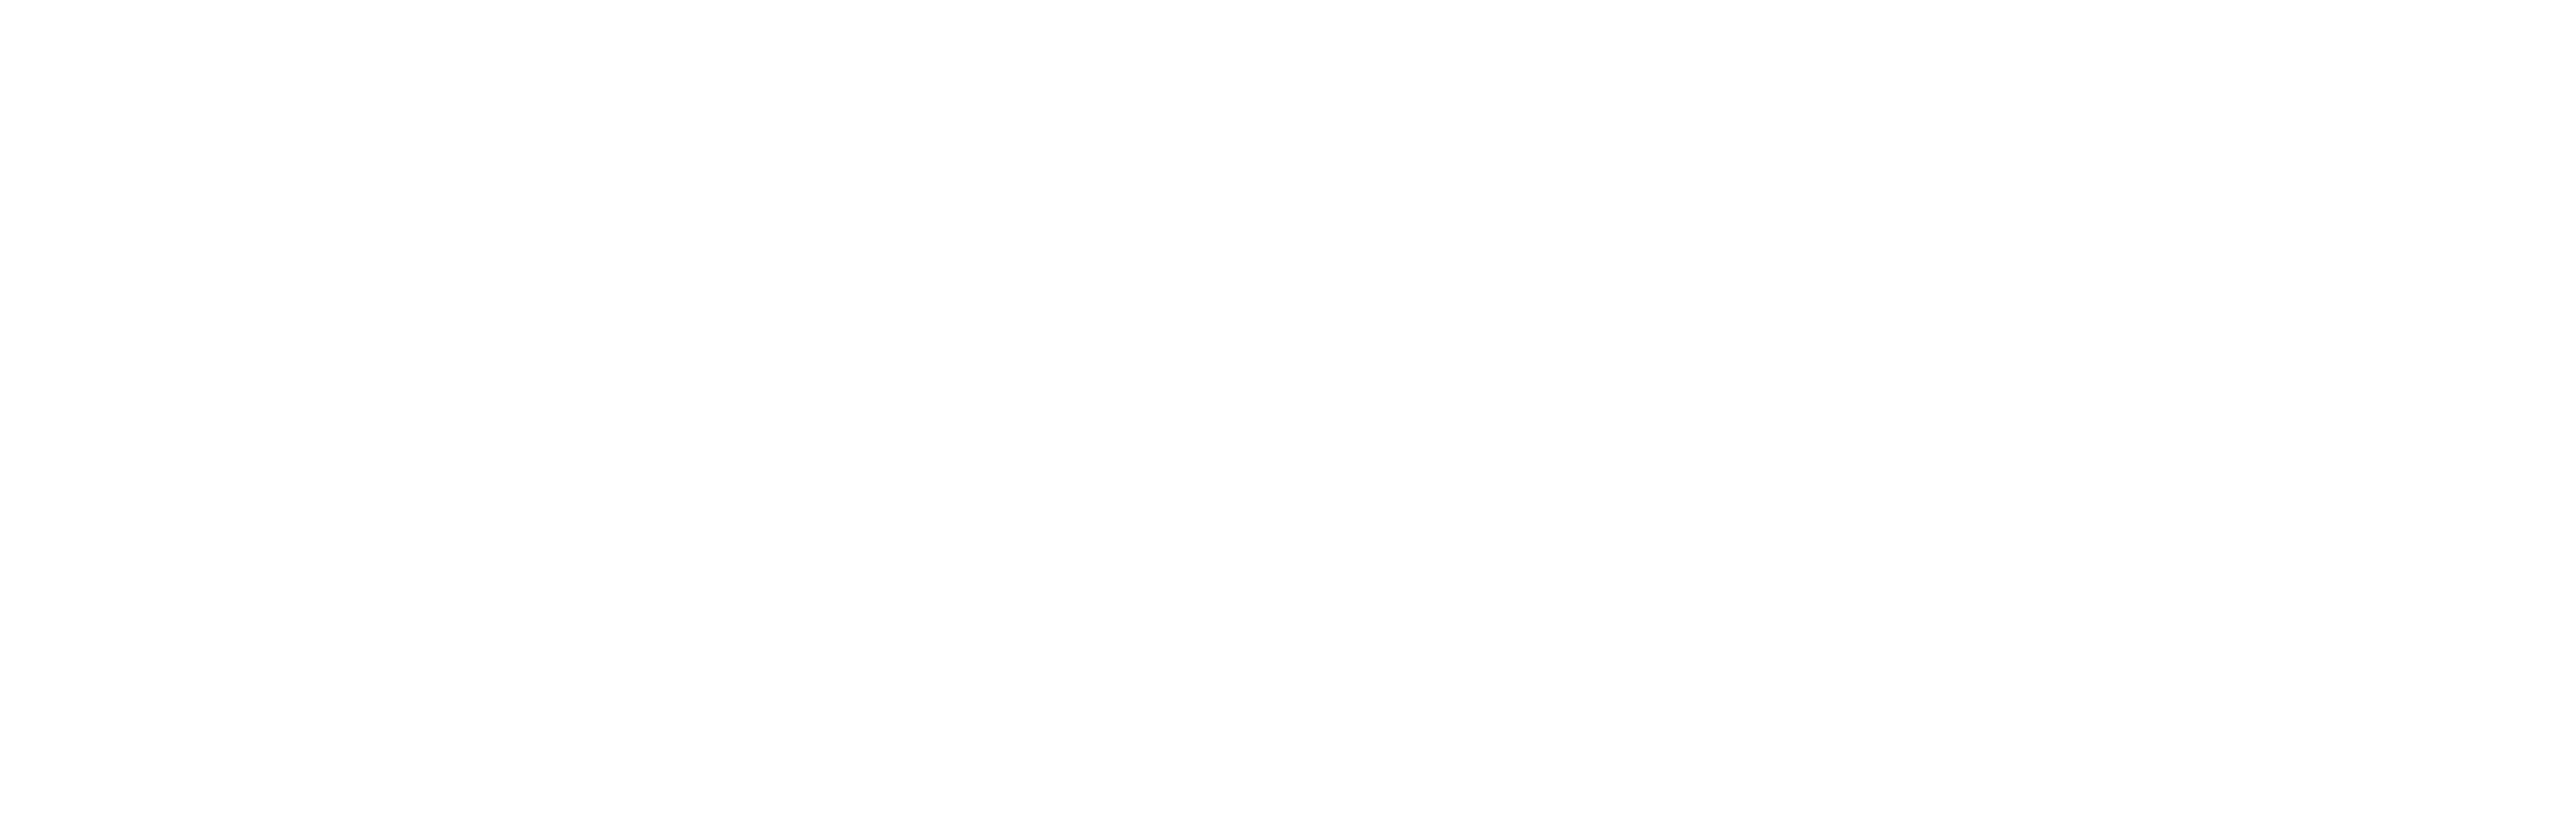 sports731-wht-logo